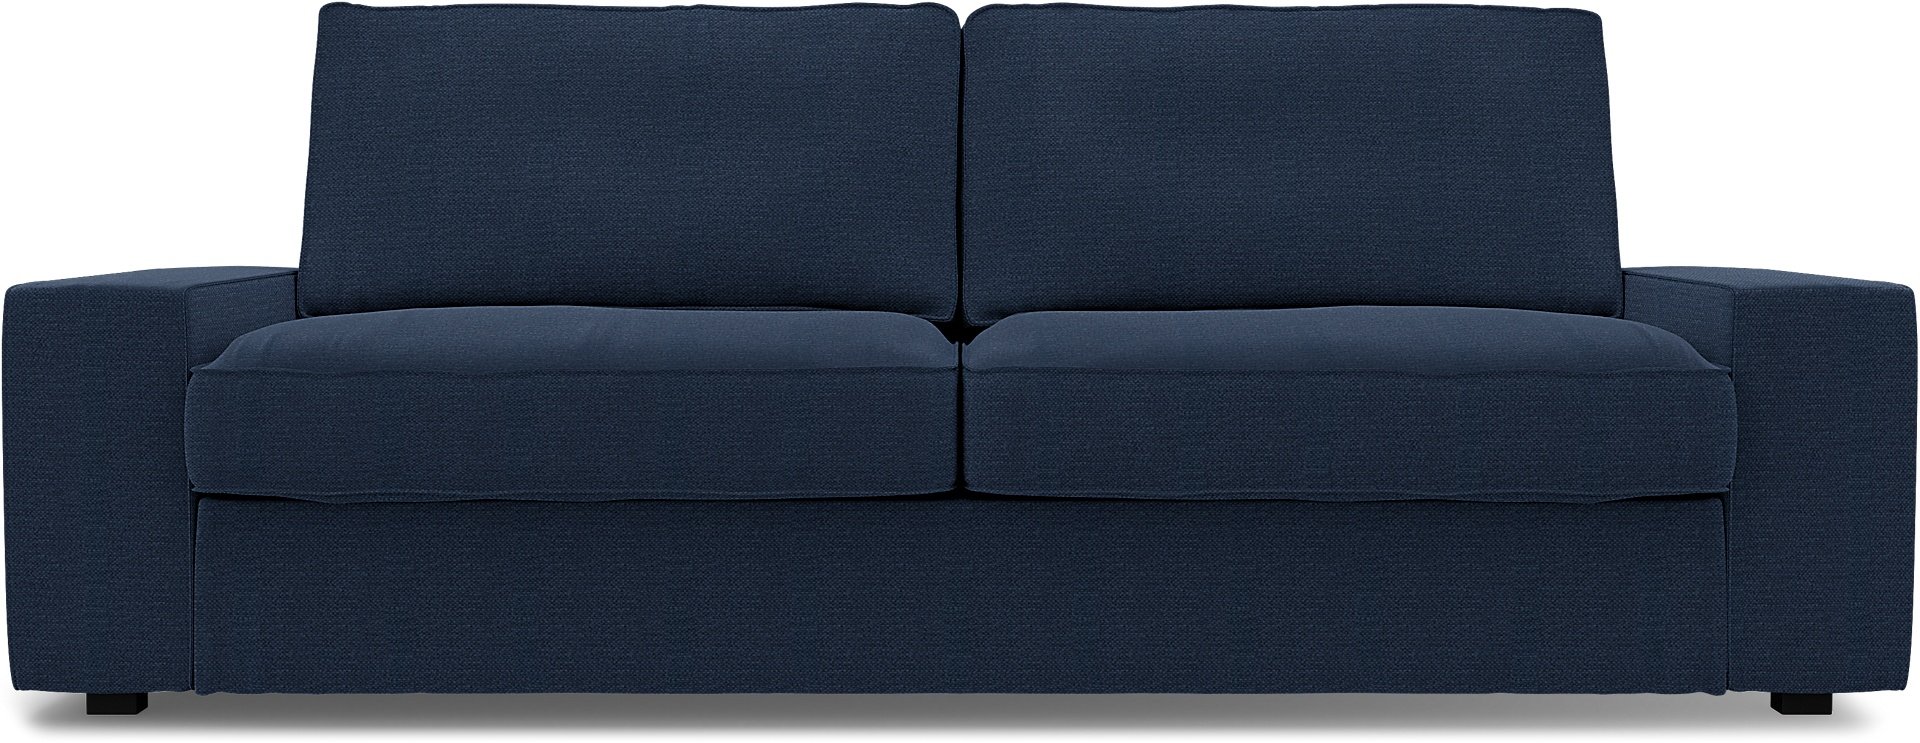 IKEA - Kivik 3 Seater Sofa Cover, Navy Blue, Linen - Bemz